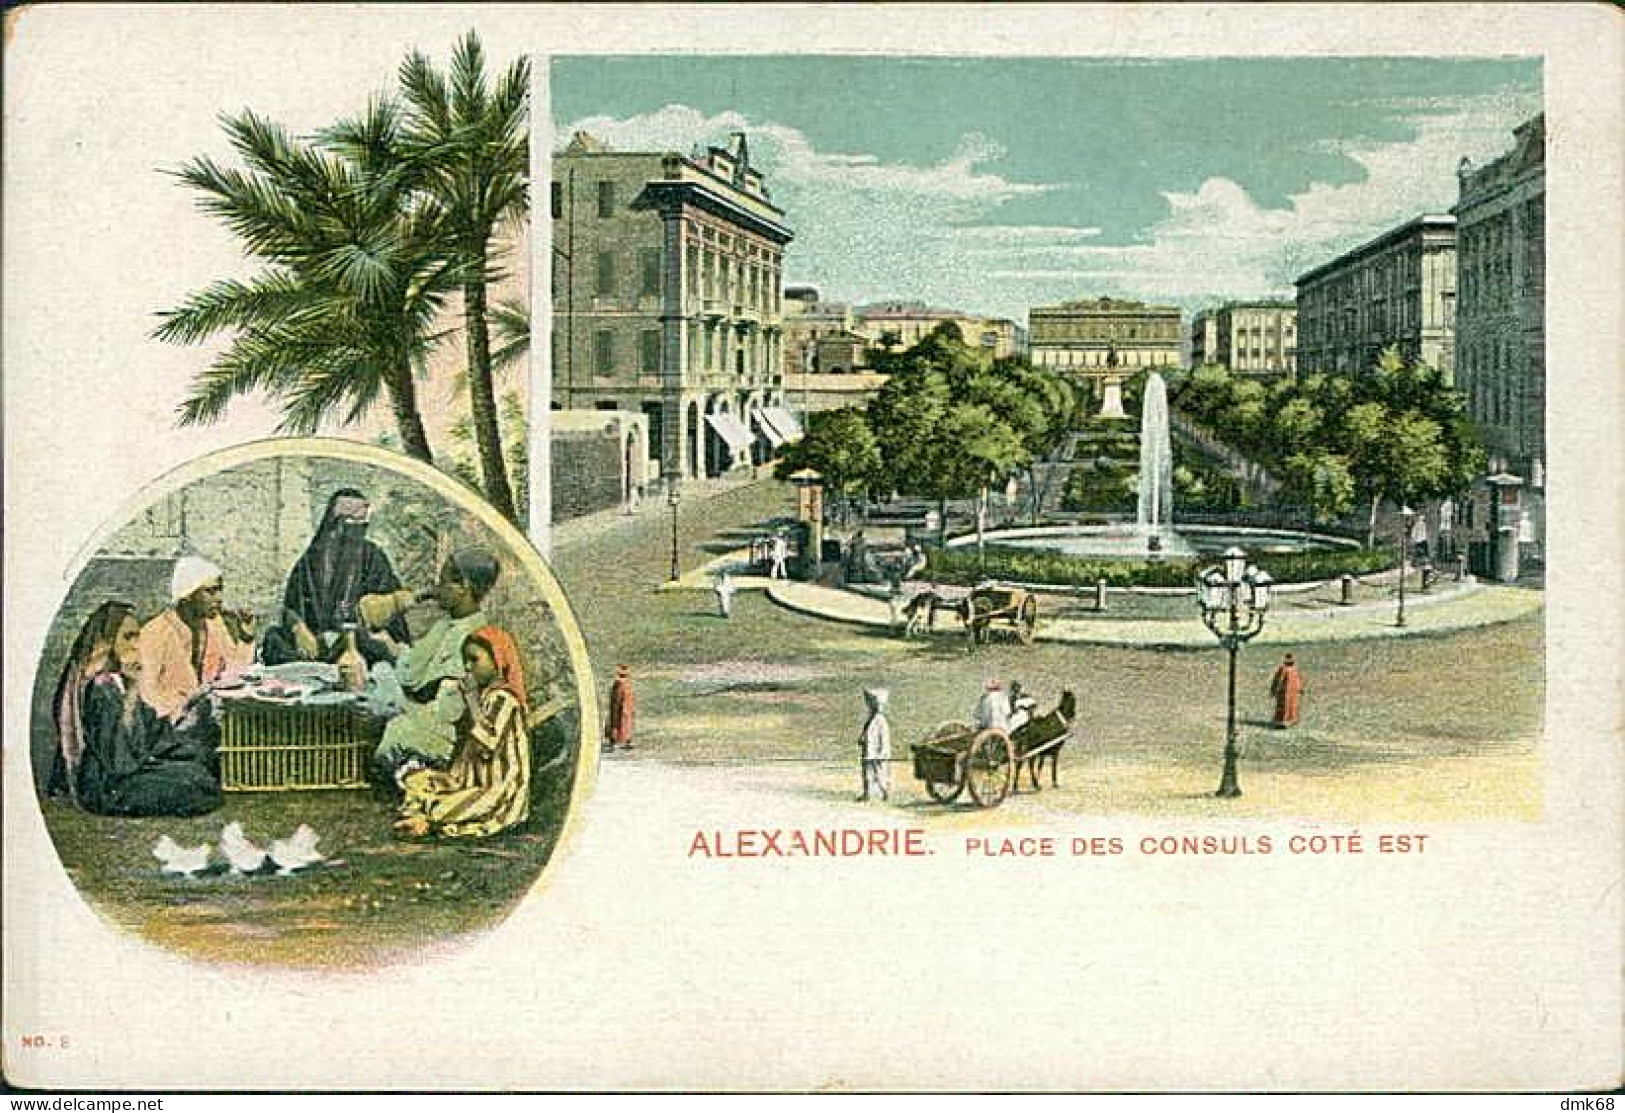 EGYPT - ALEXANDRIA / ALEXANDRIE - PLACE DES CONSULS COTE EST - 1900s (12636) - Alexandrië